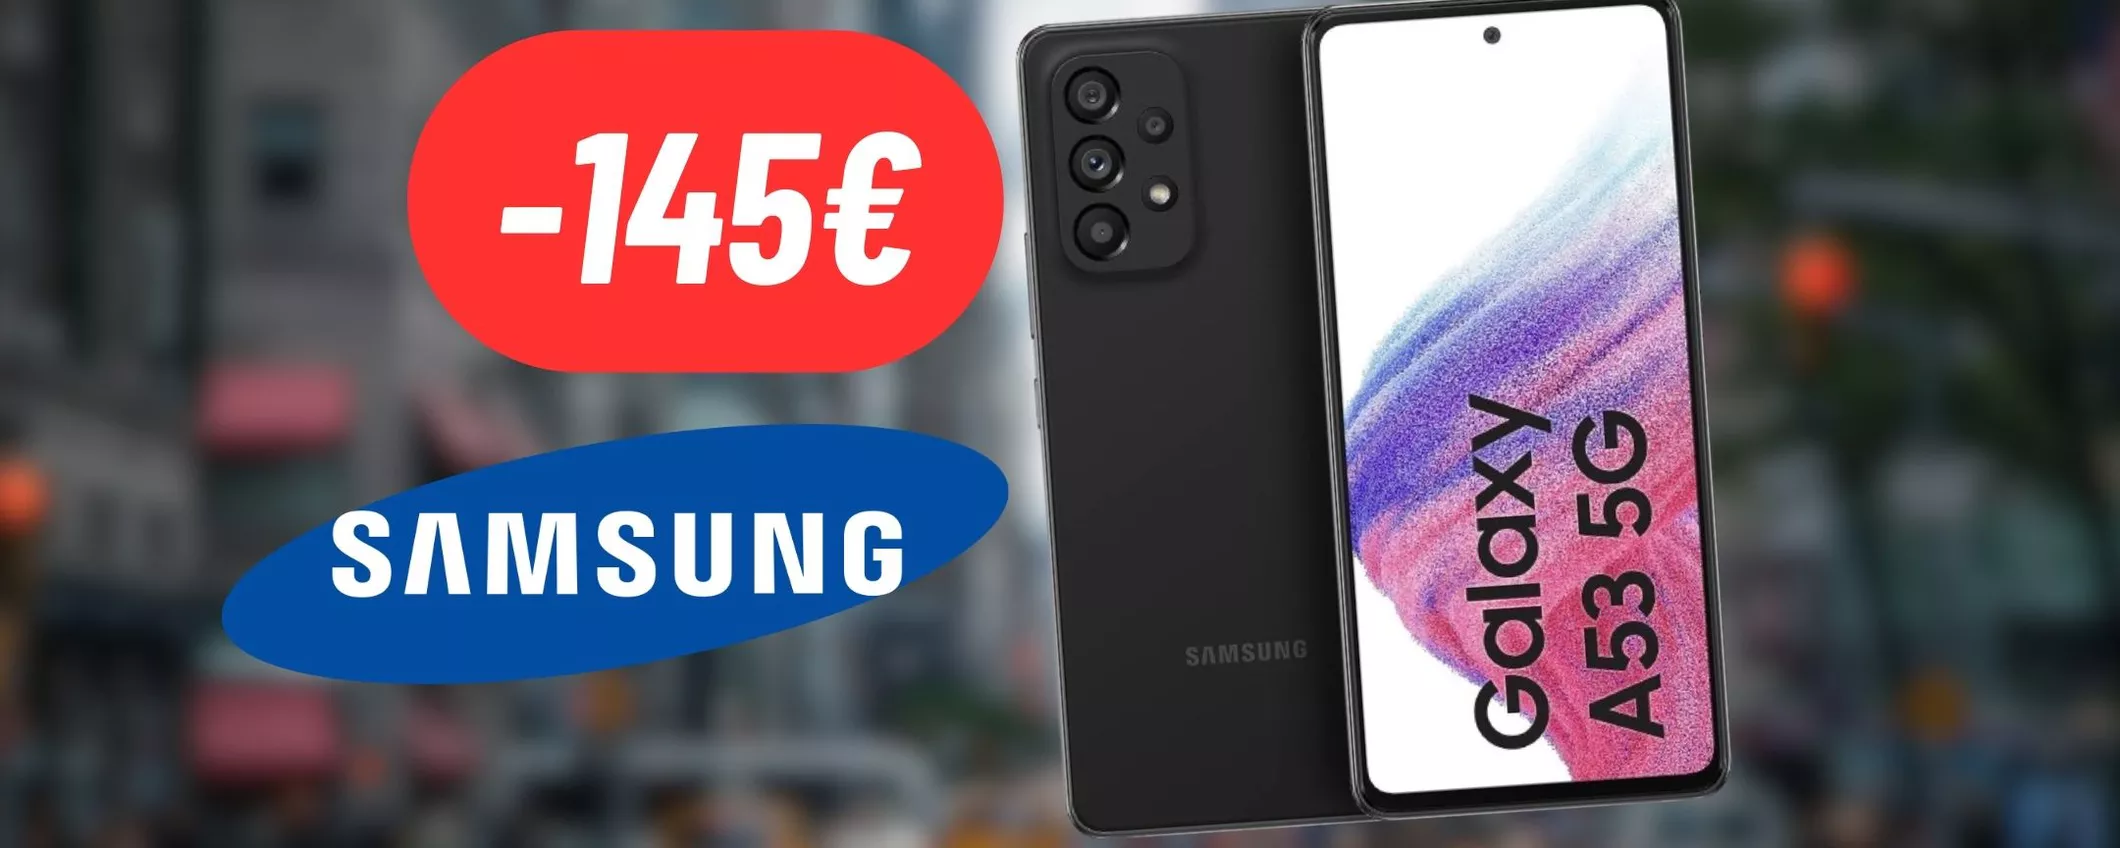 RISPARMIA 145€ sul Samsung Galaxy A53: offerta eBay davvero da best buy